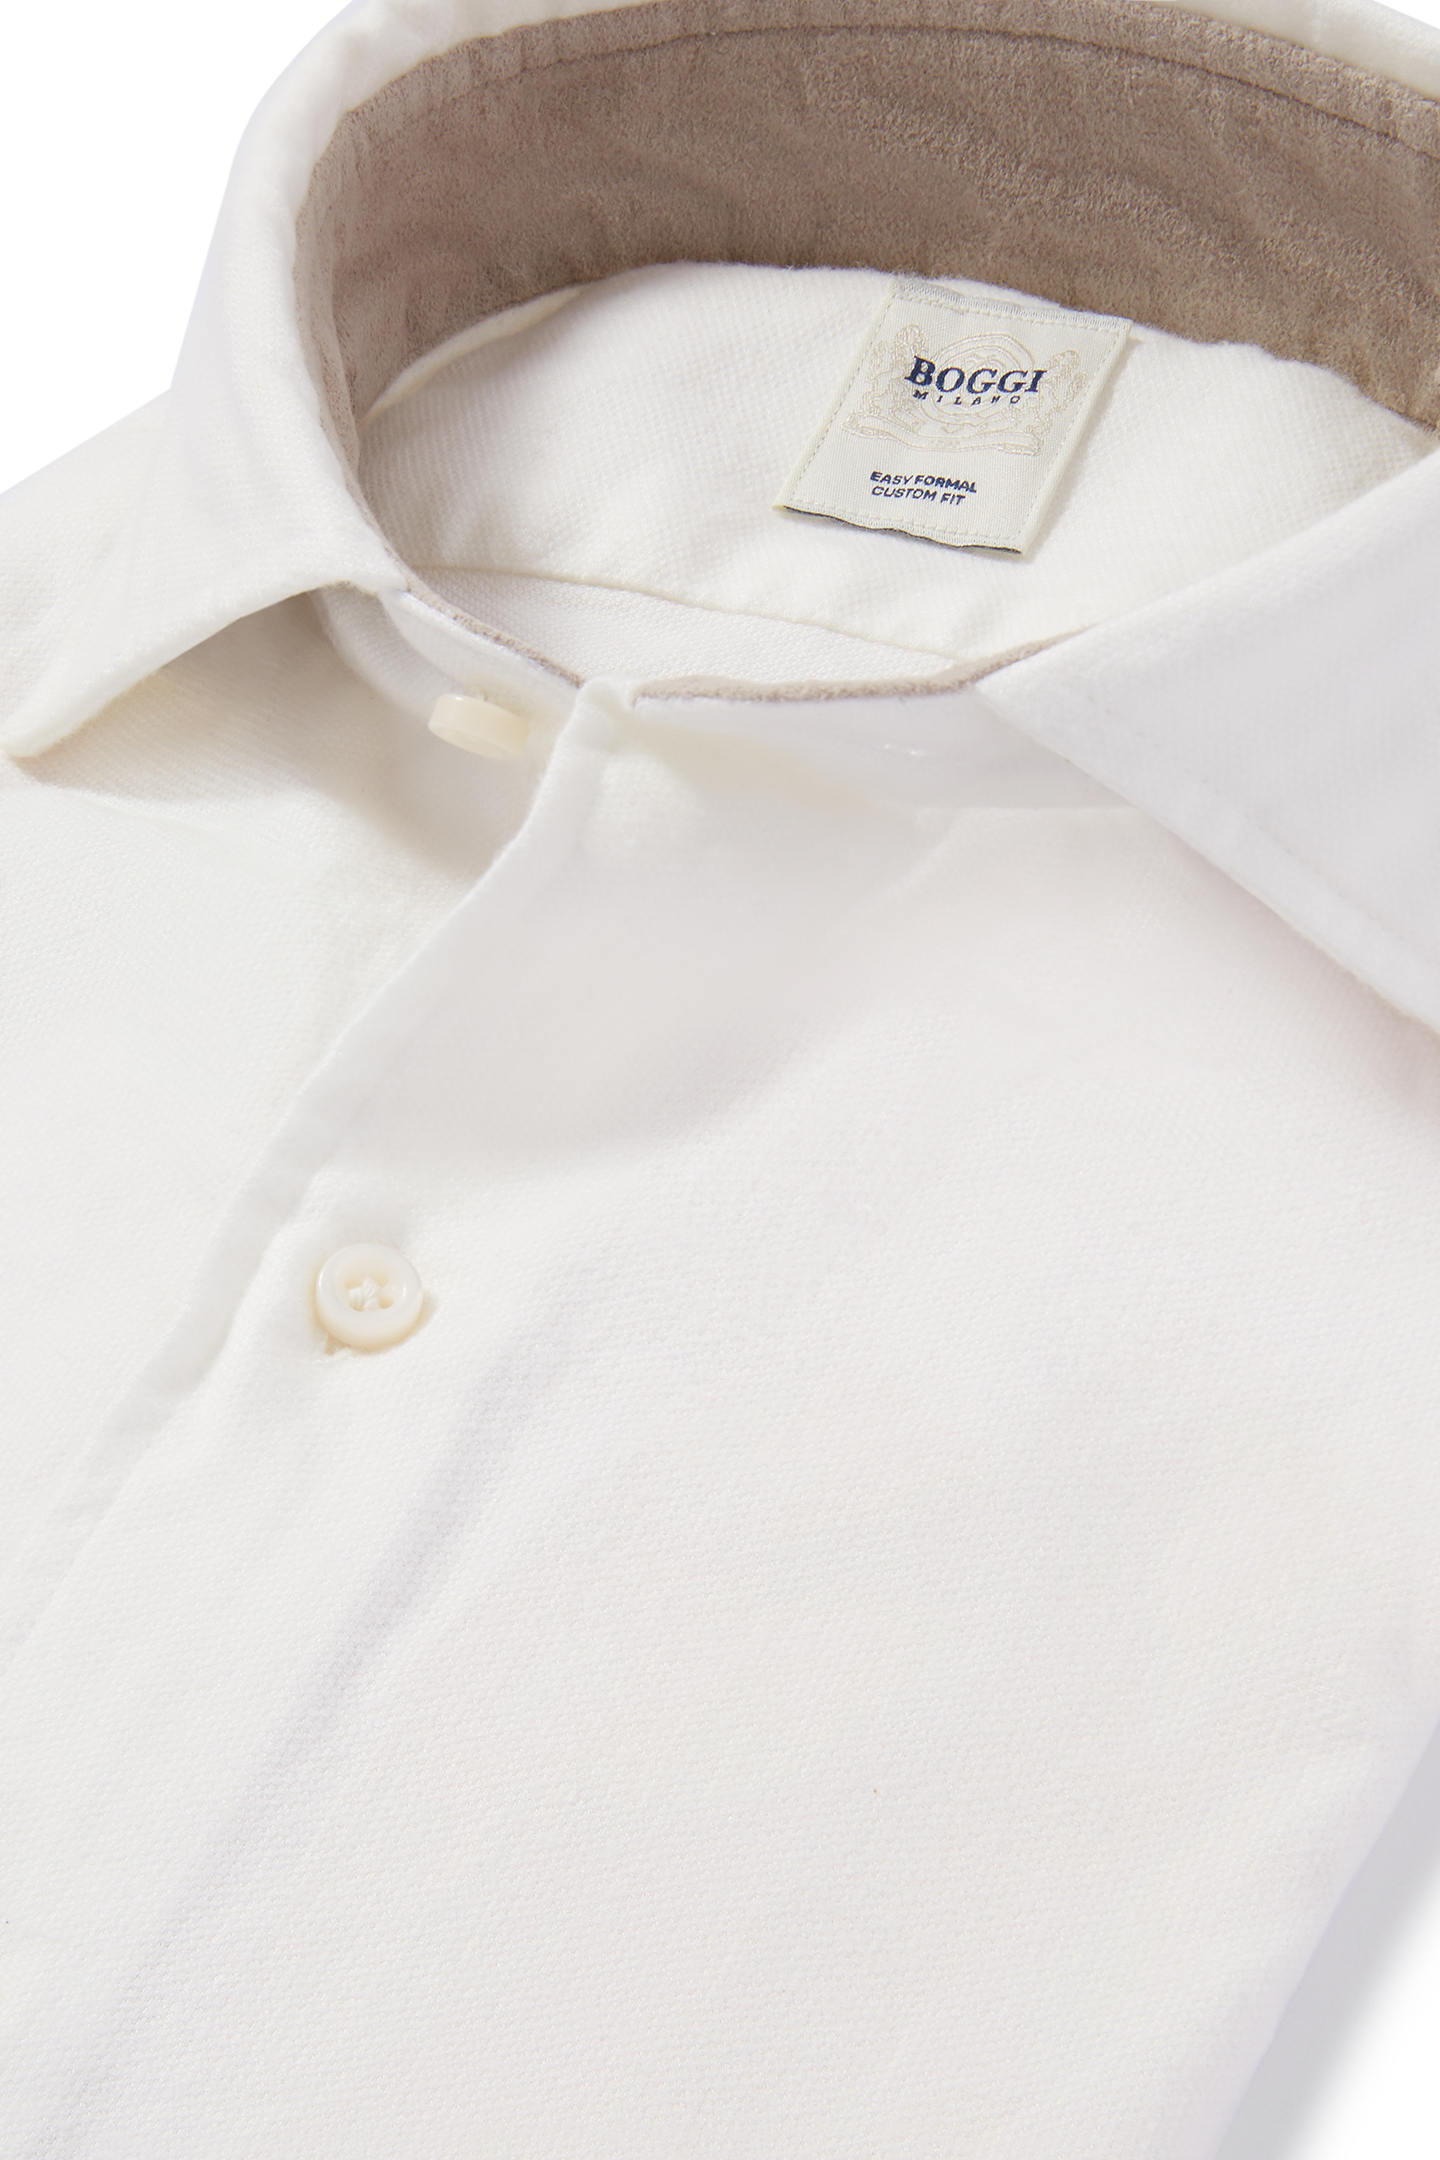 Kent Collar Shirt custom fit white shirt with kent collar, white, small ... KQHDAOC